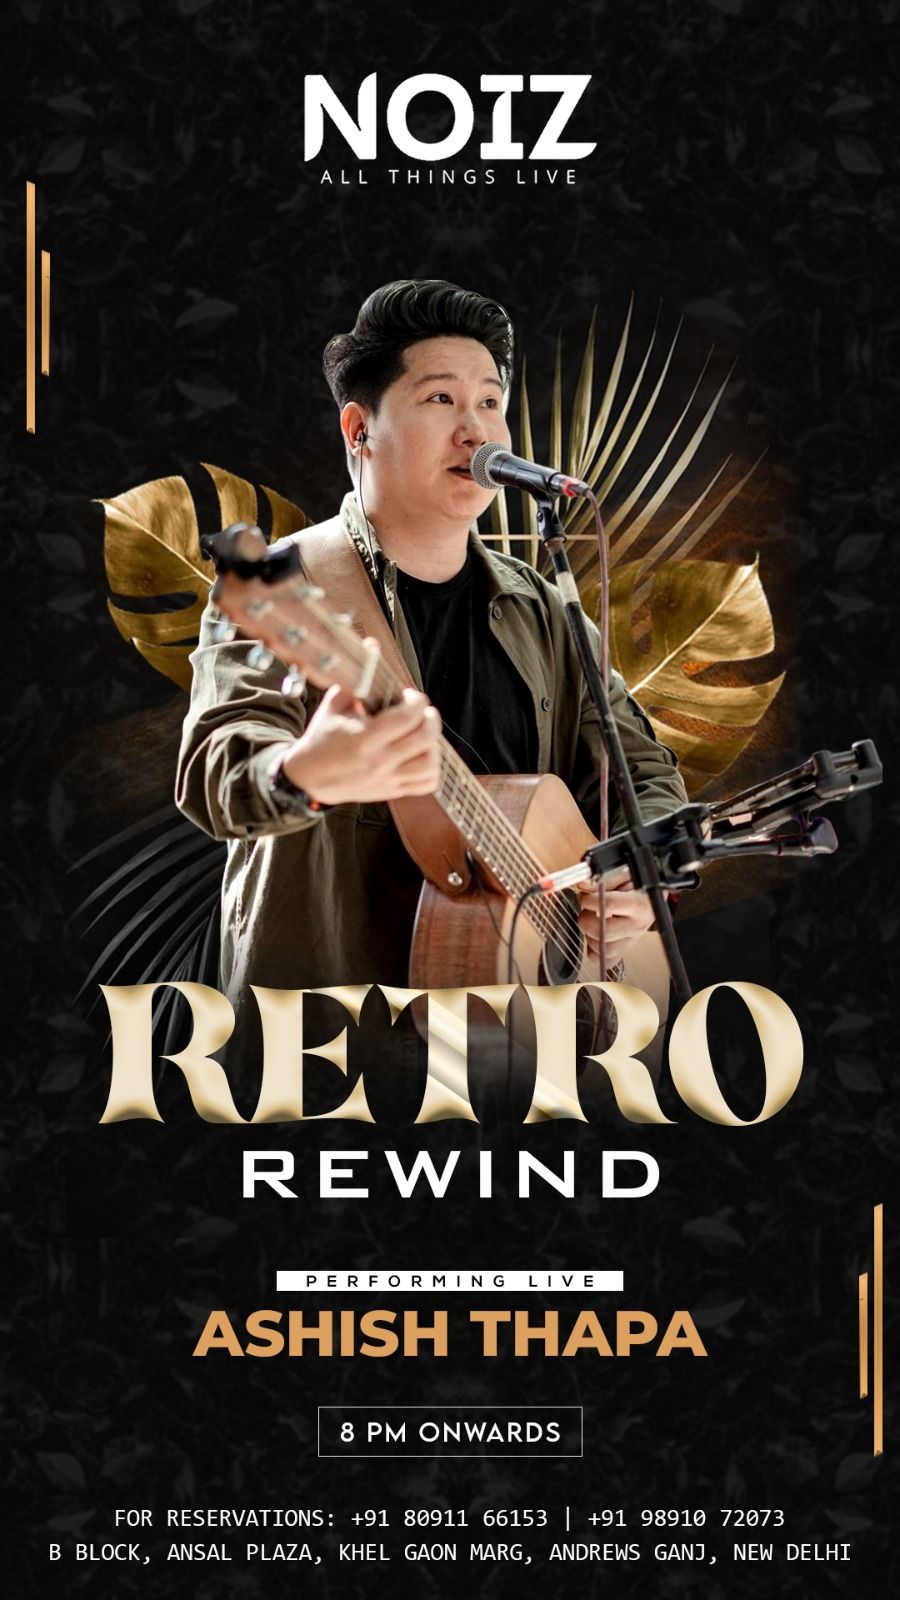 Retro Rewind Wednesday - Ashish thapa Live 